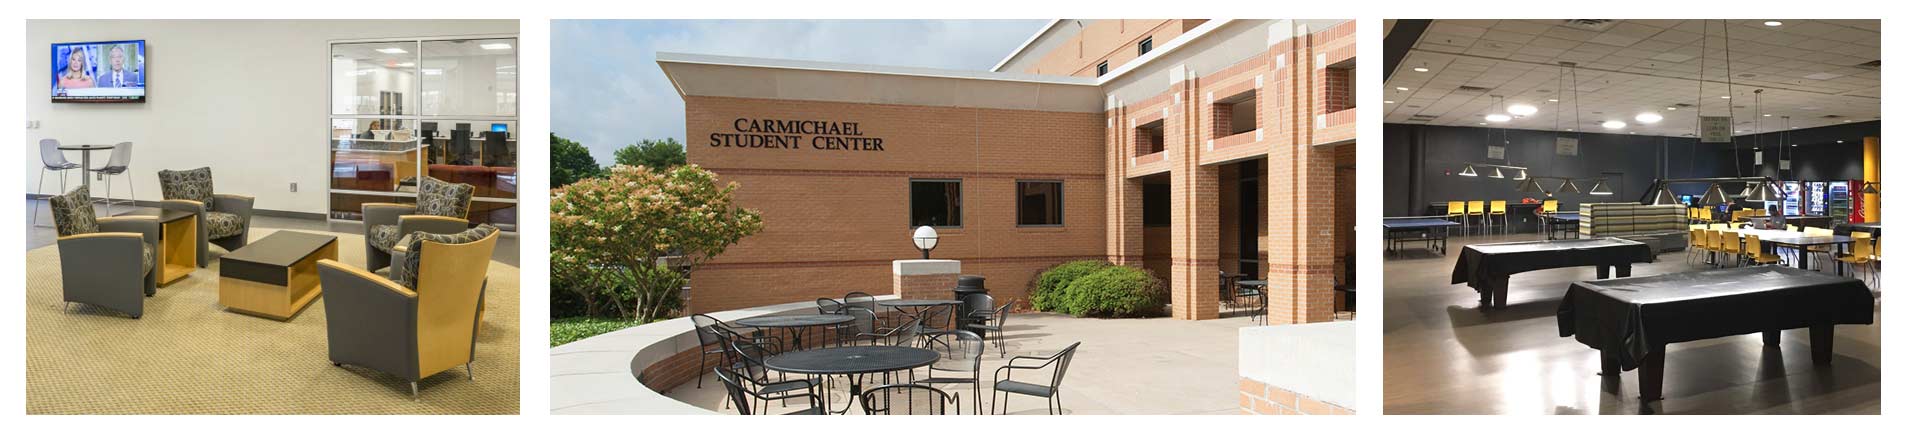 KSU Events and Venue Management Carmichael Student Center Header